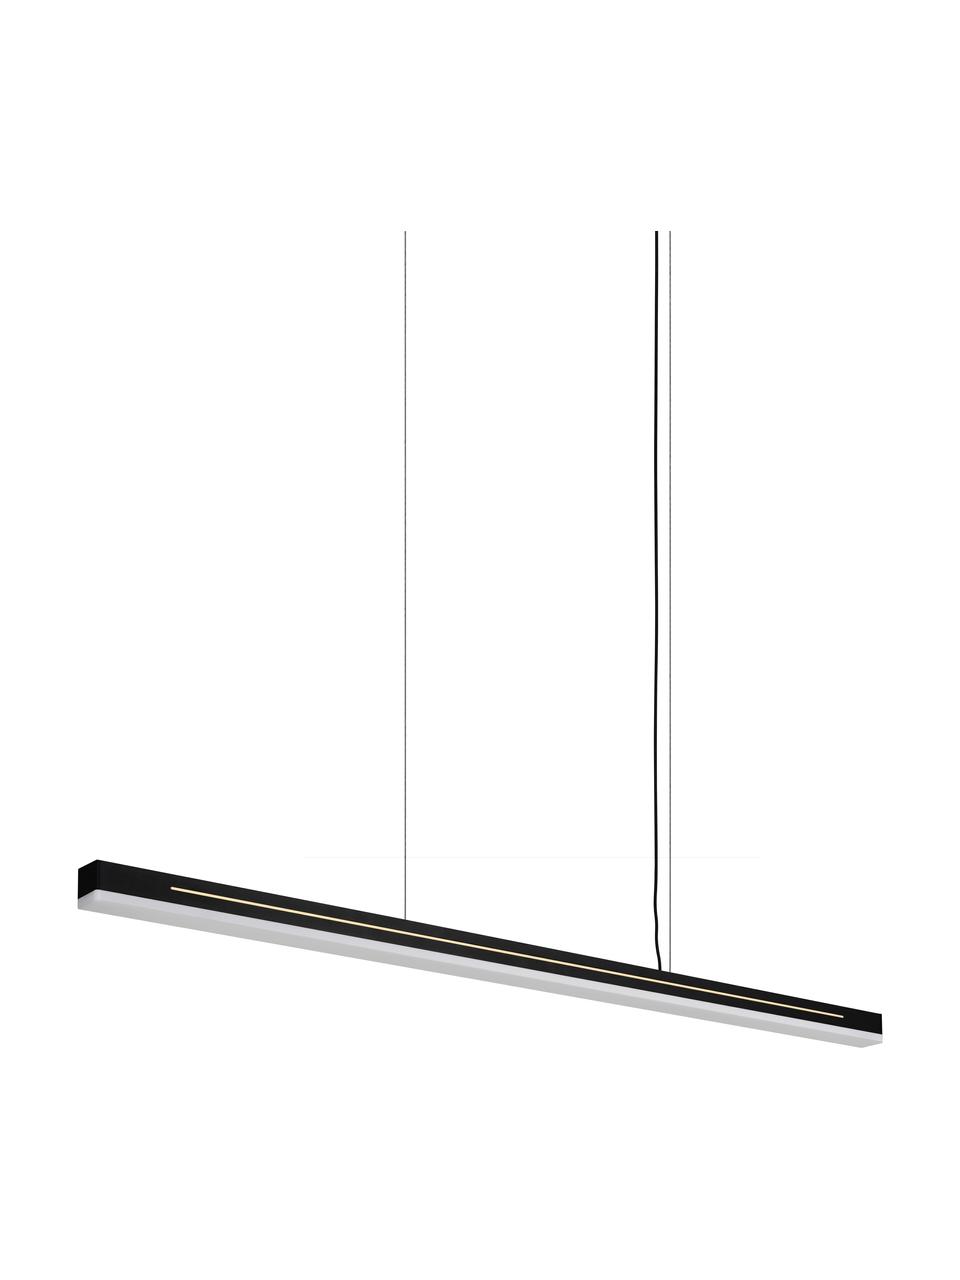 Grote LED hanglamp Skylar in zwart, Lampenkap: gecoat aluminium, Diffuser: kunststof, Baldakijn: gecoat aluminium, Zwart, 115 x 4 cm